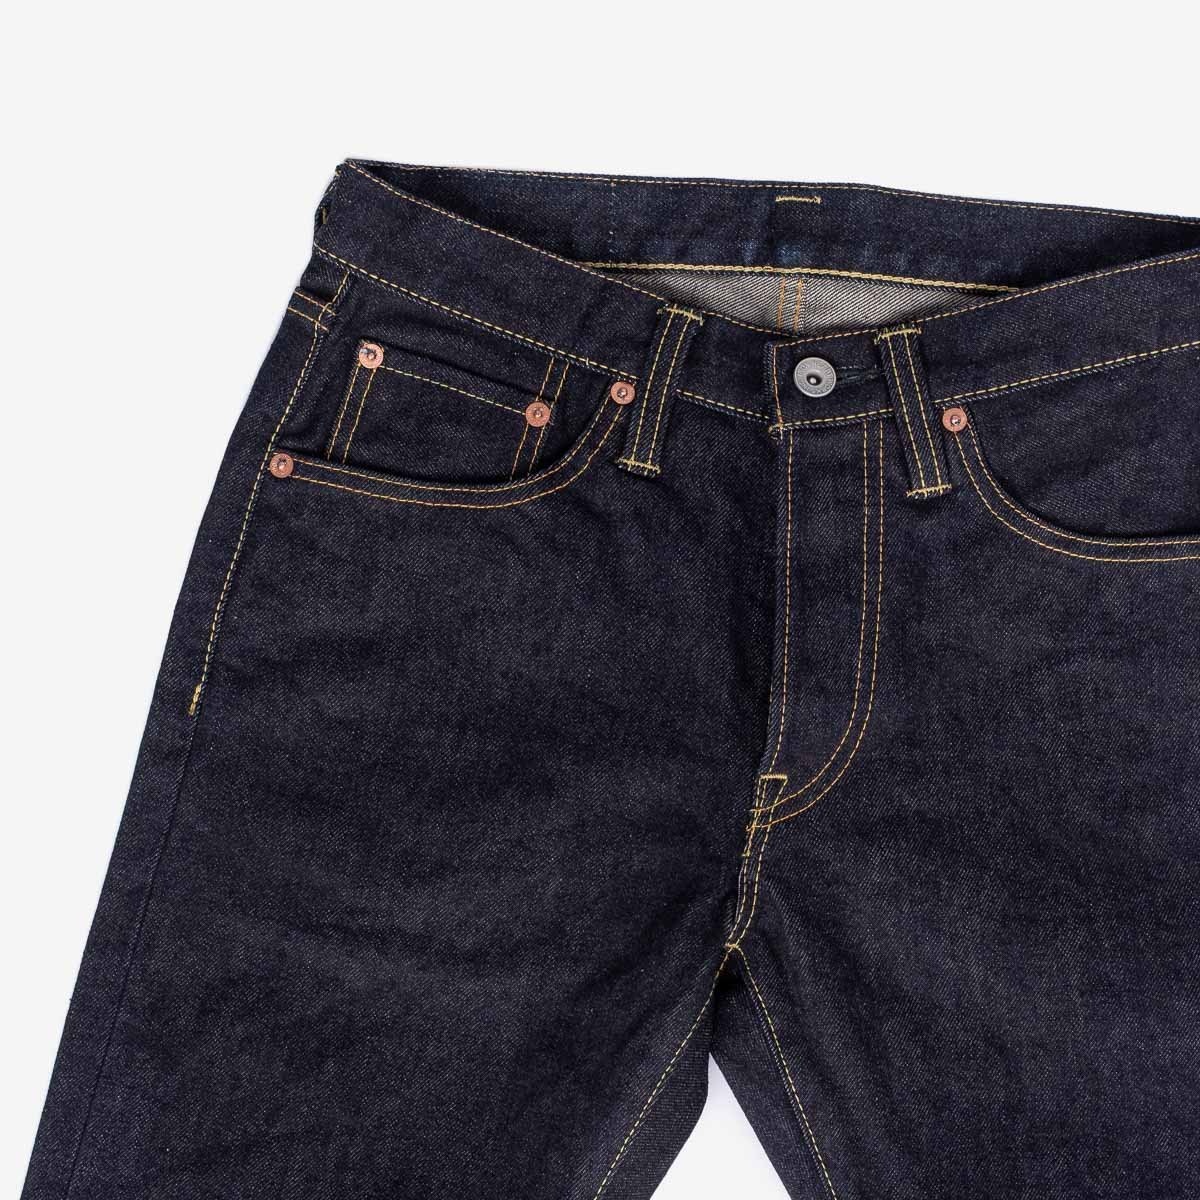 IH-777S-142 14oz Selvedge Denim Slim Tapered Cut Jeans - Indigo - 6